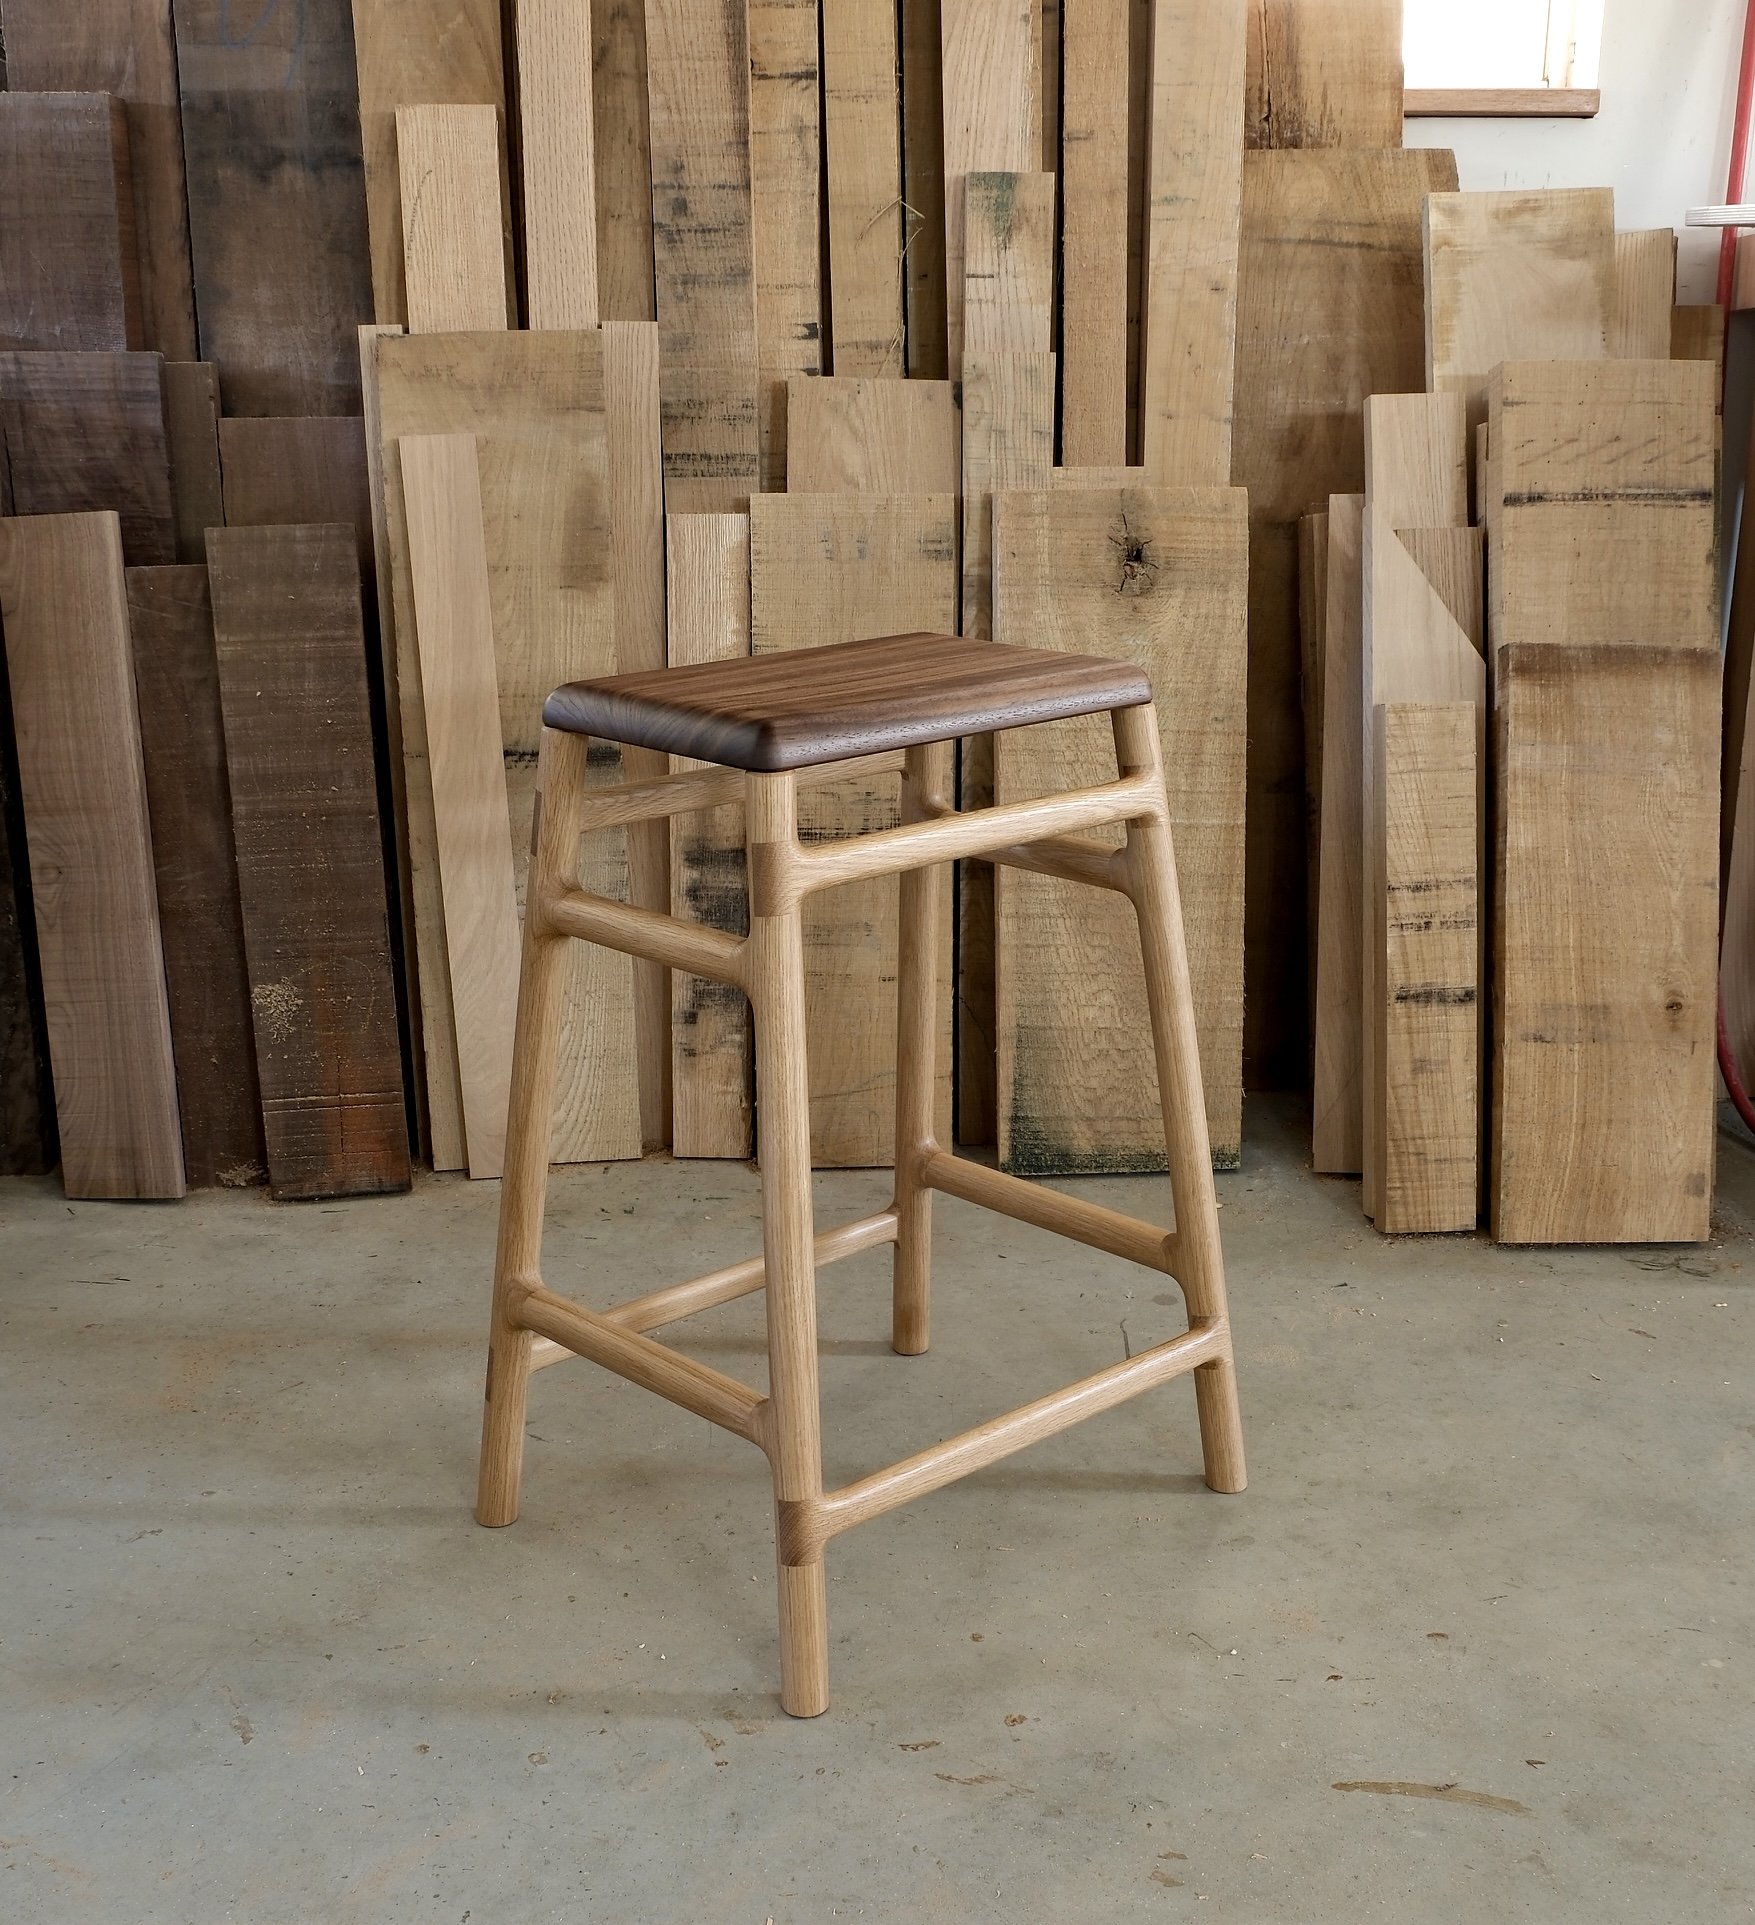 albright stool woodscrap backround 3:4 view cropped.jpg